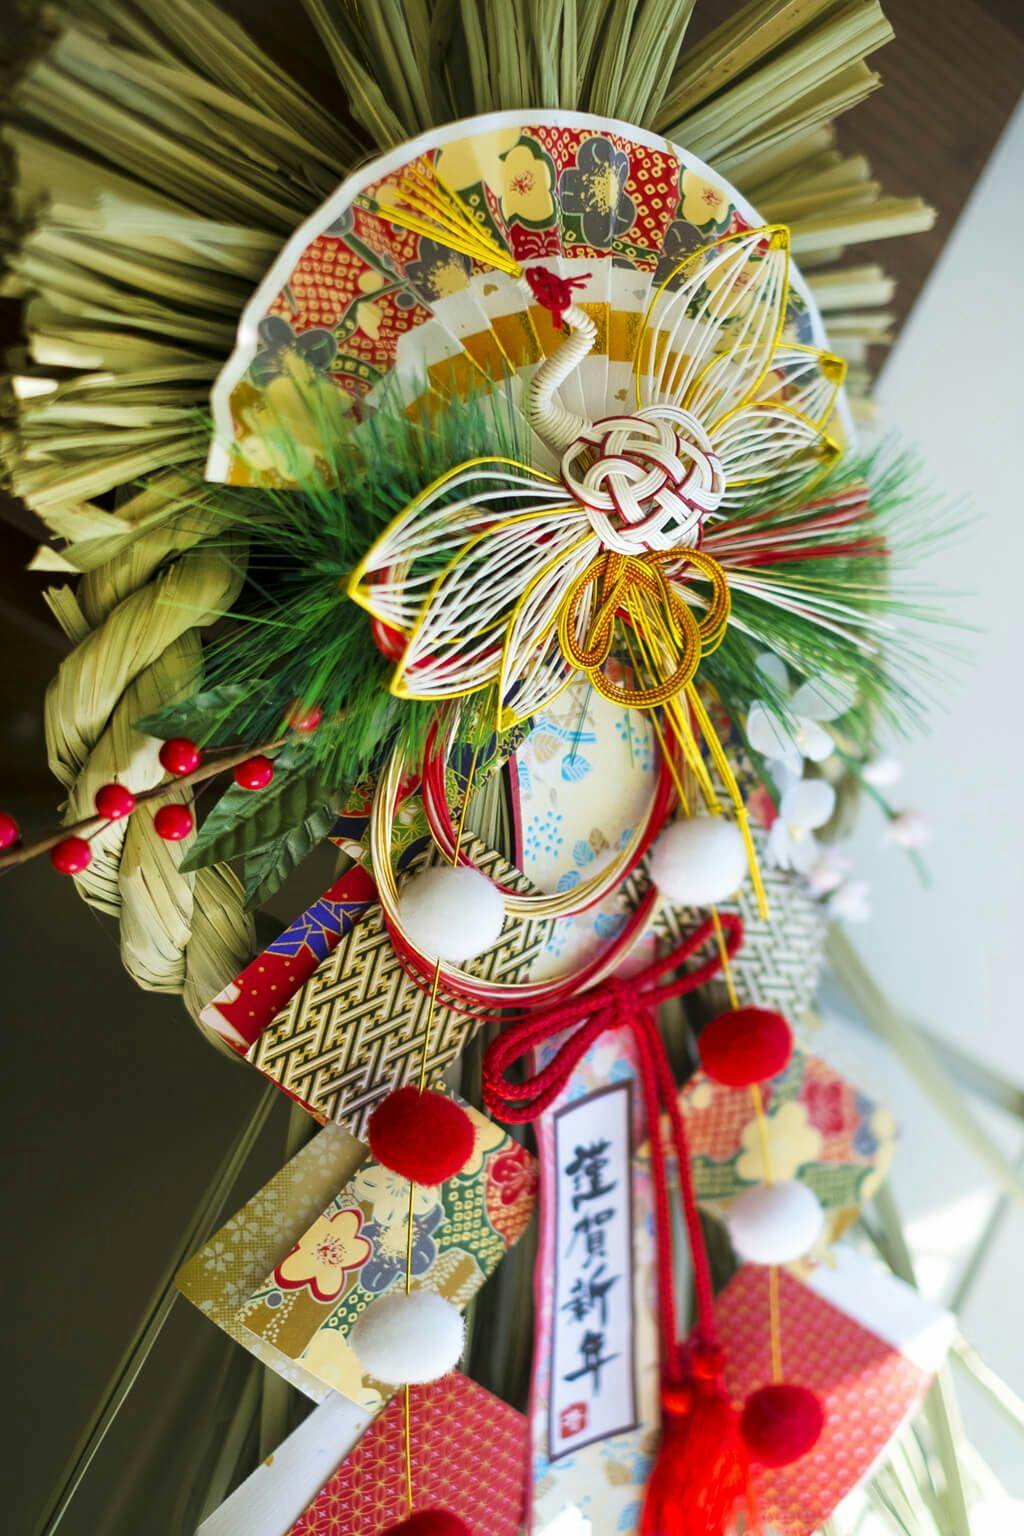 Shimenawa is a beautiful, traditional New Year’s decoration